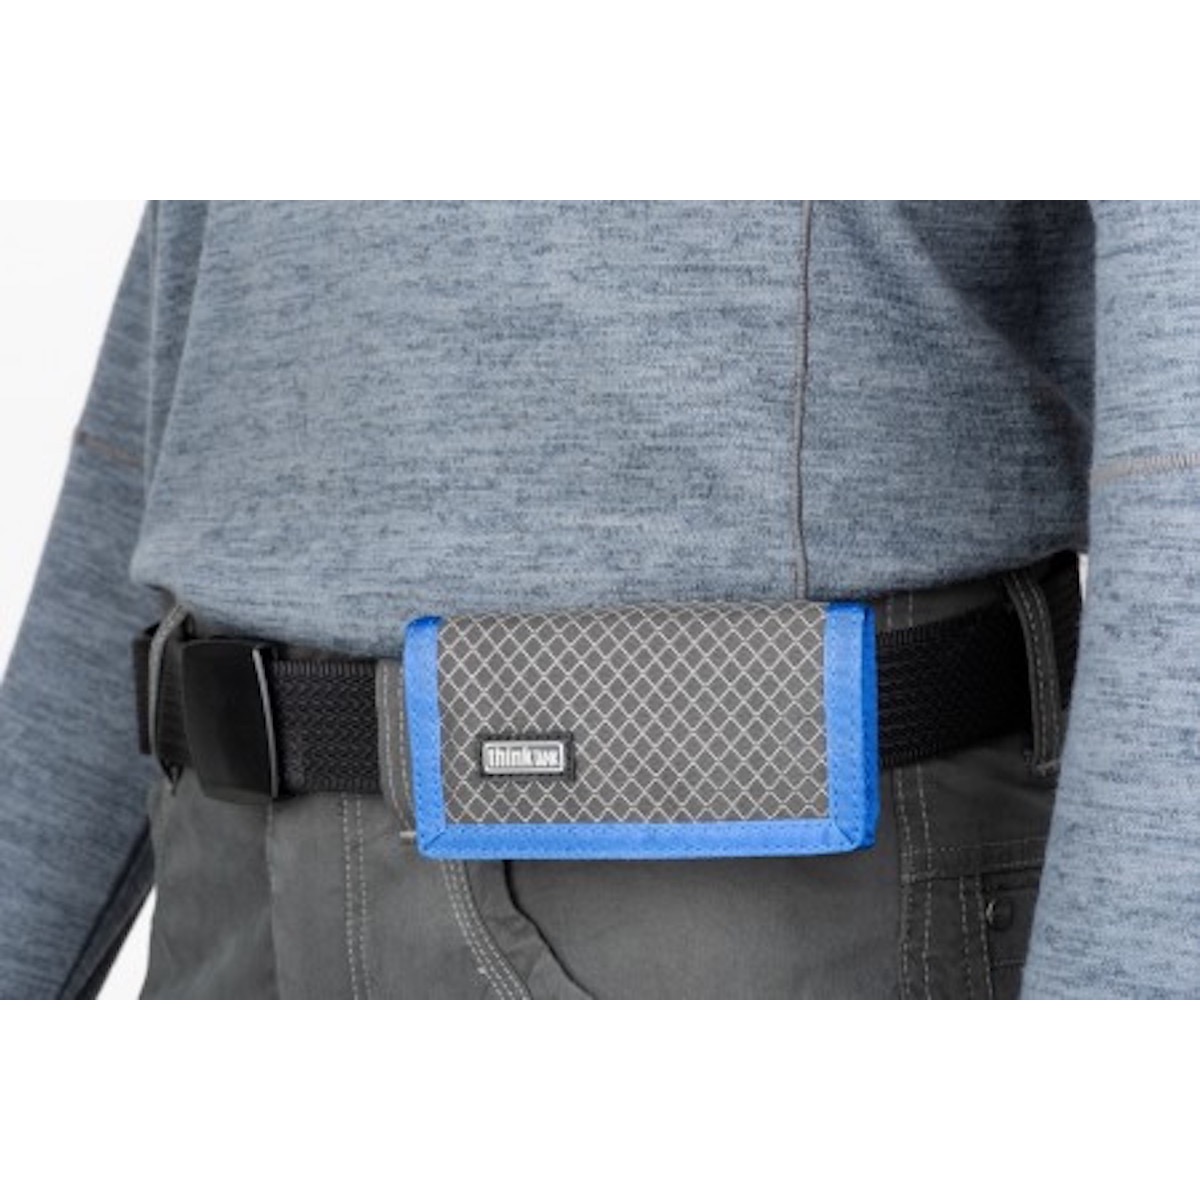 ThinkTank Pixel Pocket Rocket grau/blau Tasche